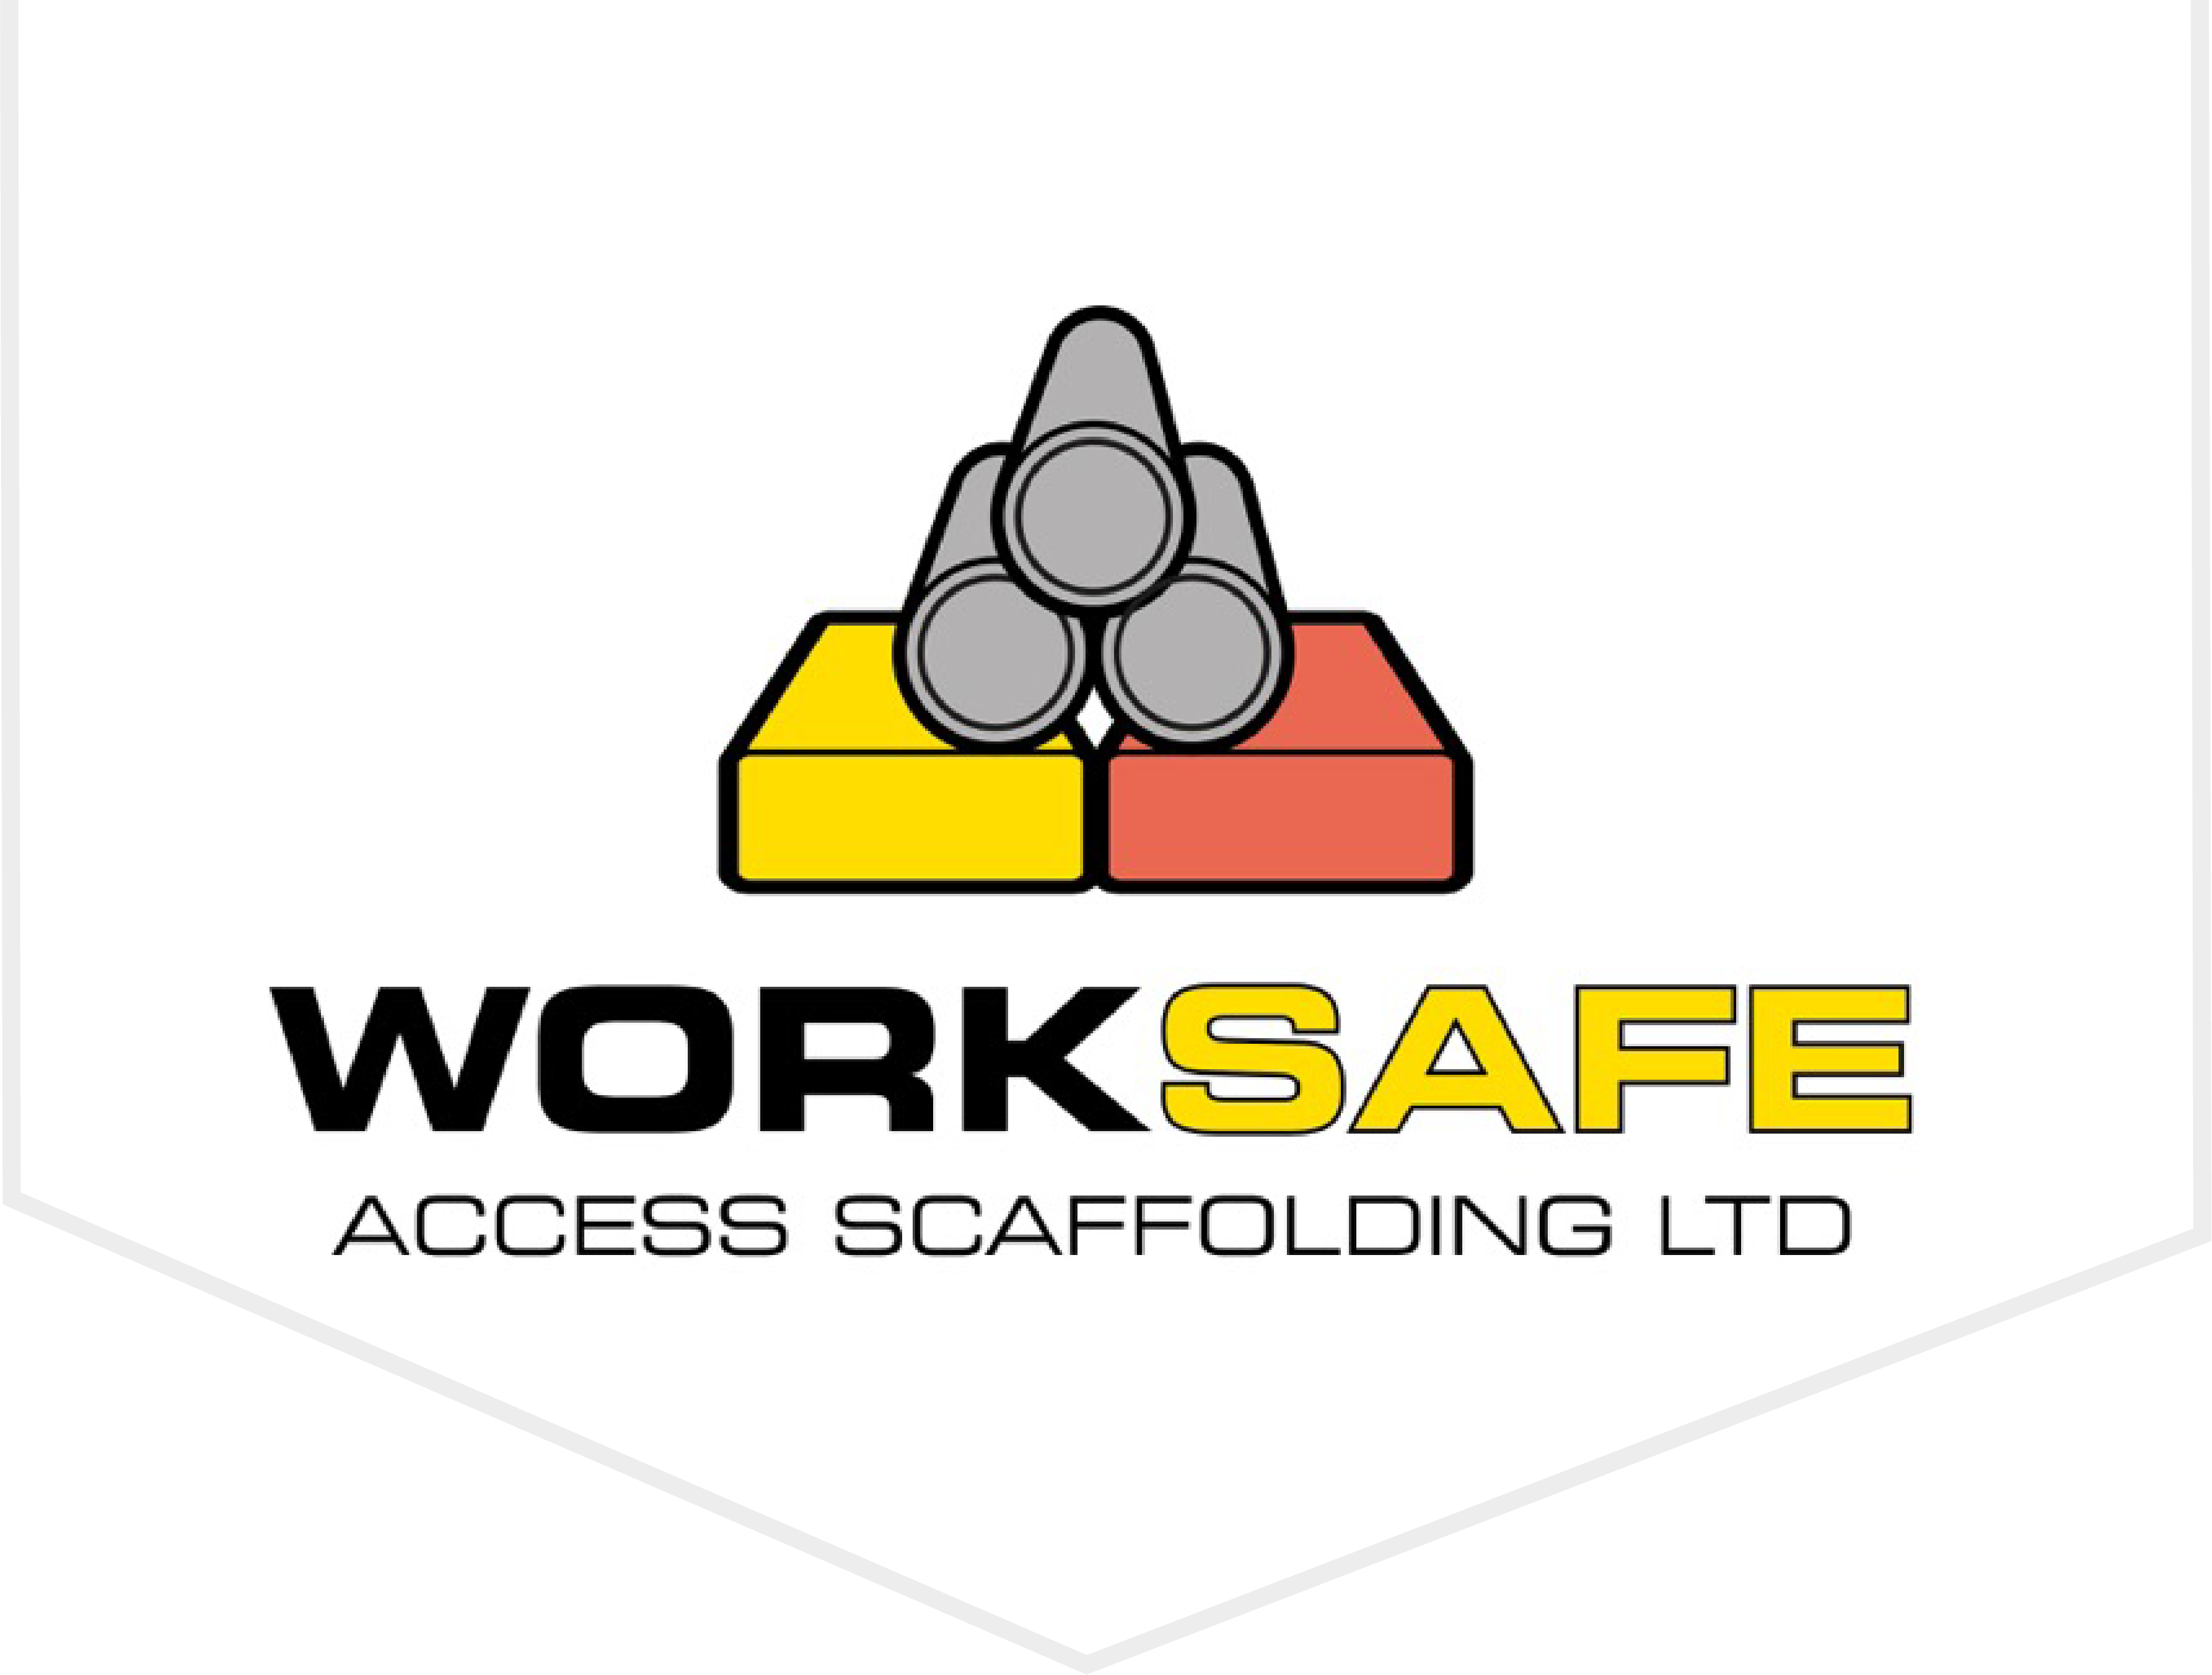 Worksafe Access Scaffolding Ltd